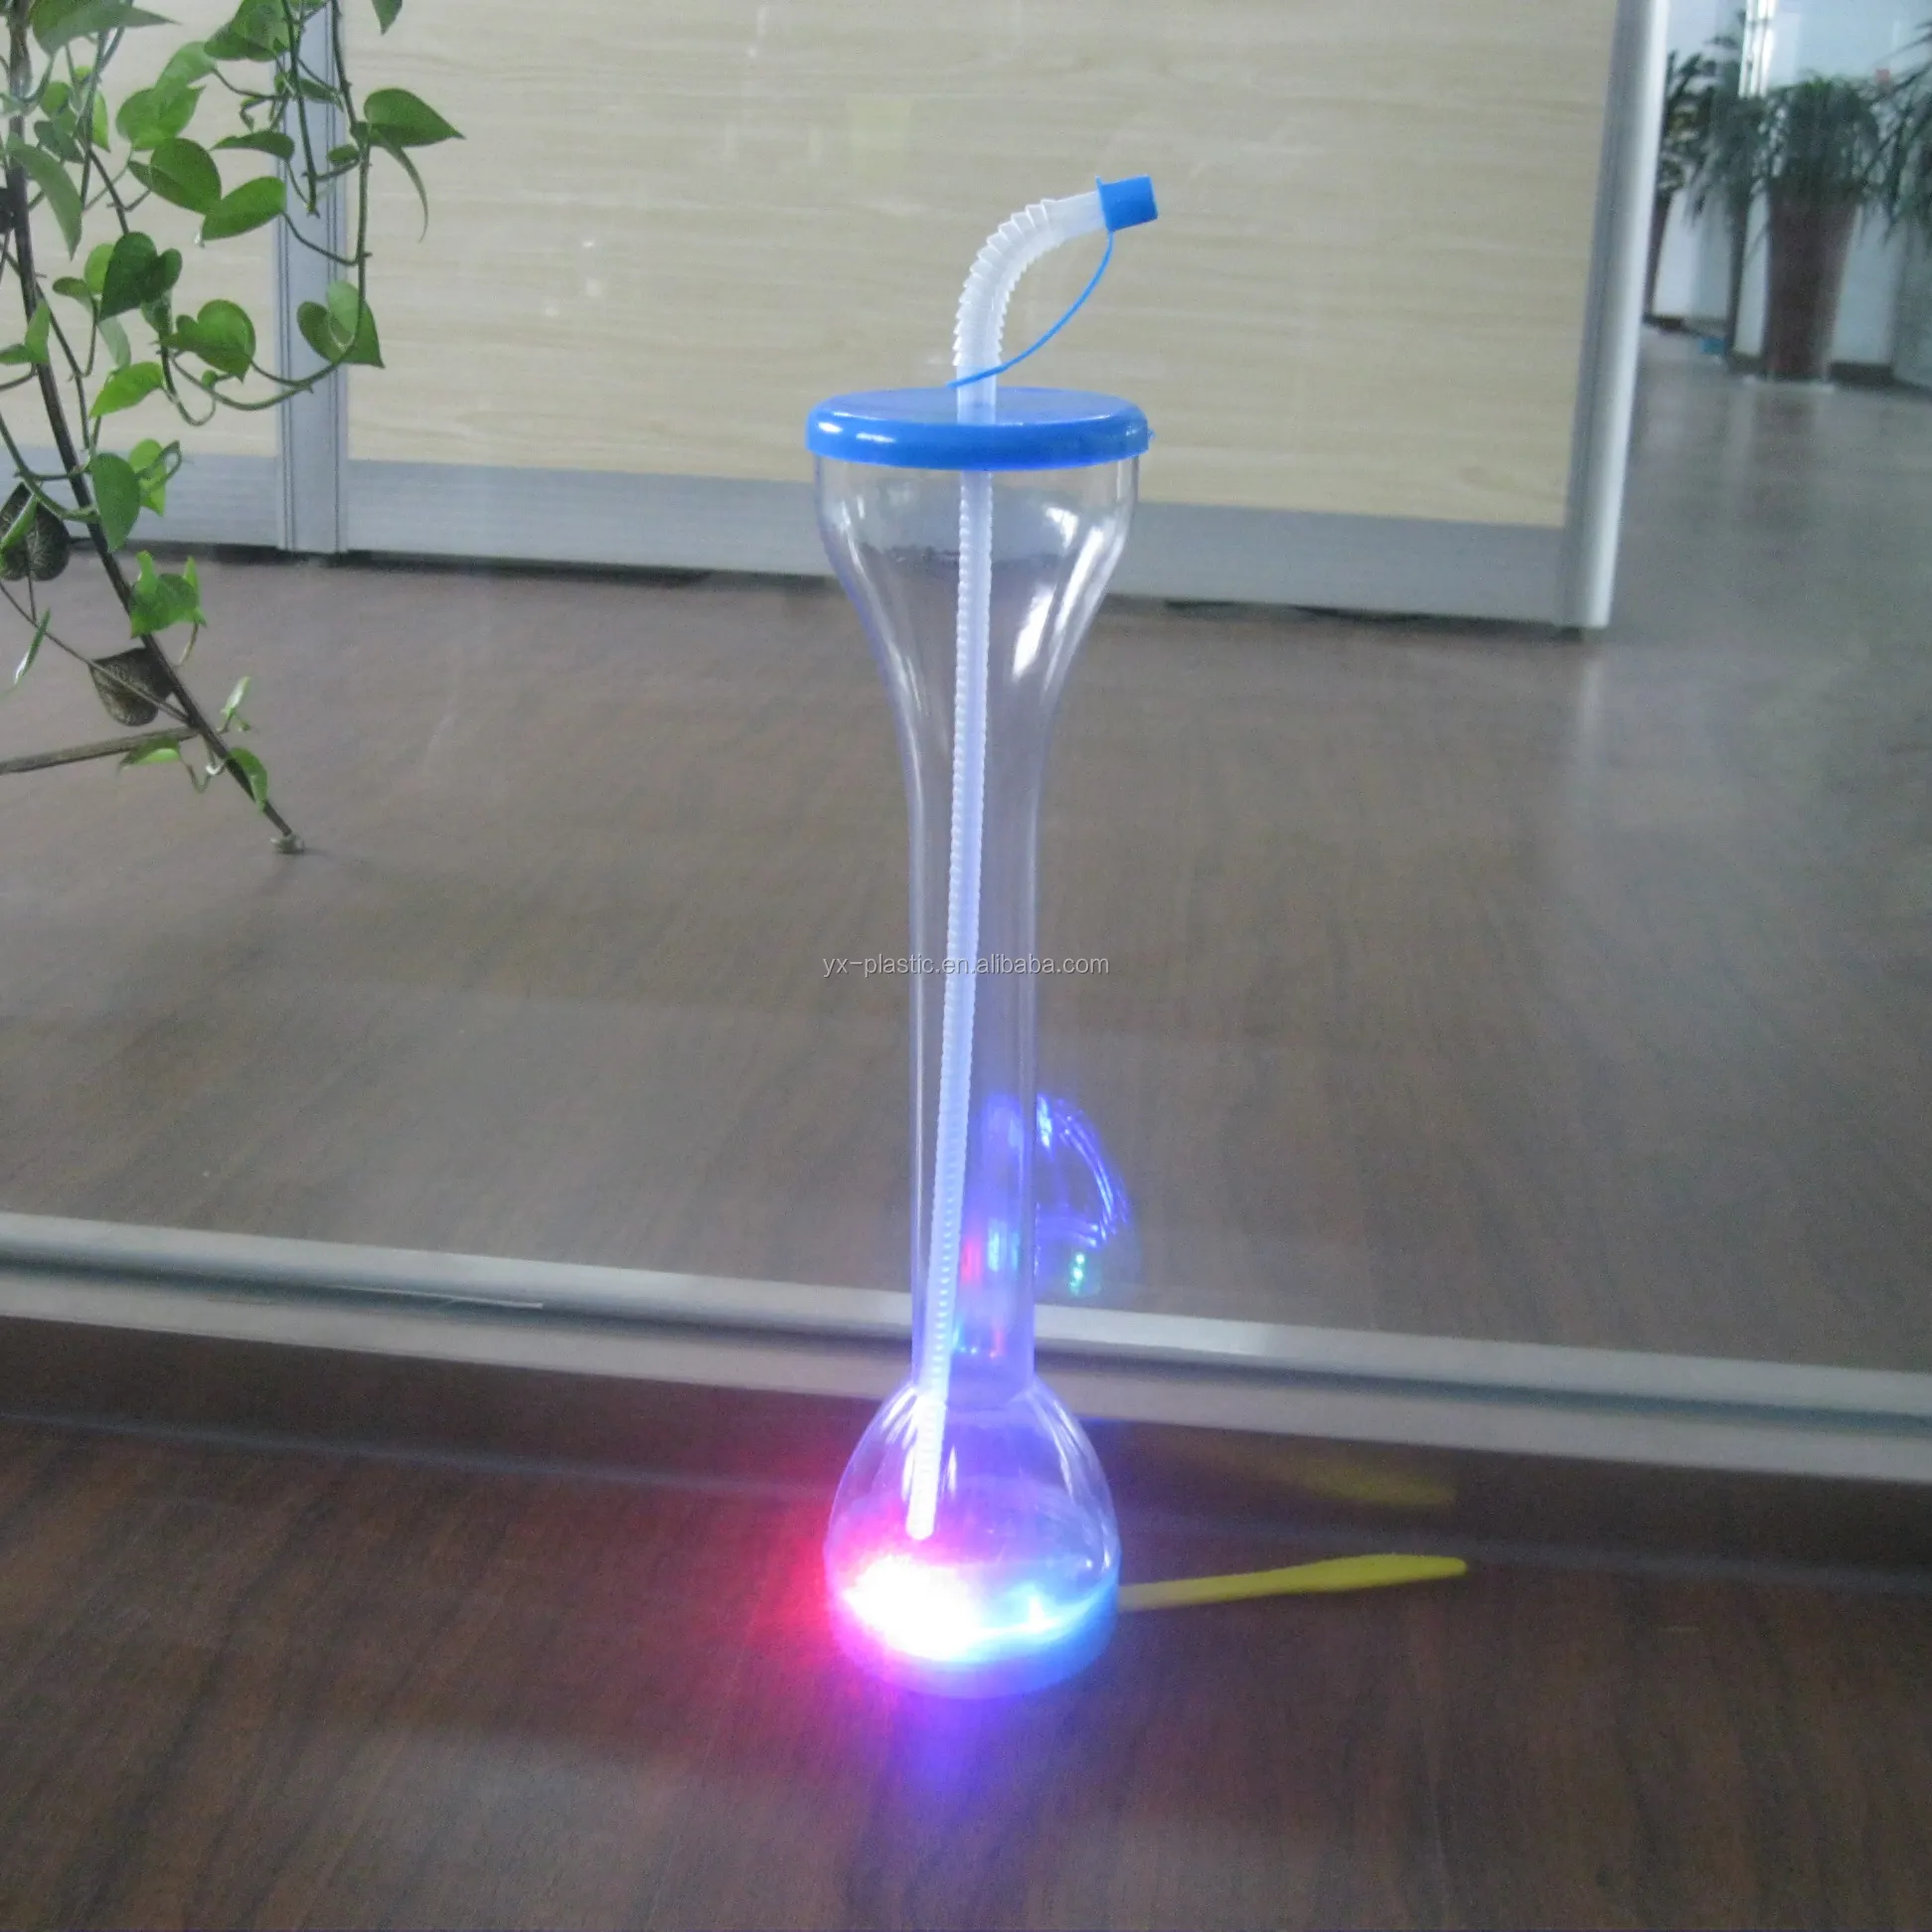 17oz flashing Yard Glass with blinking LED light for drinking